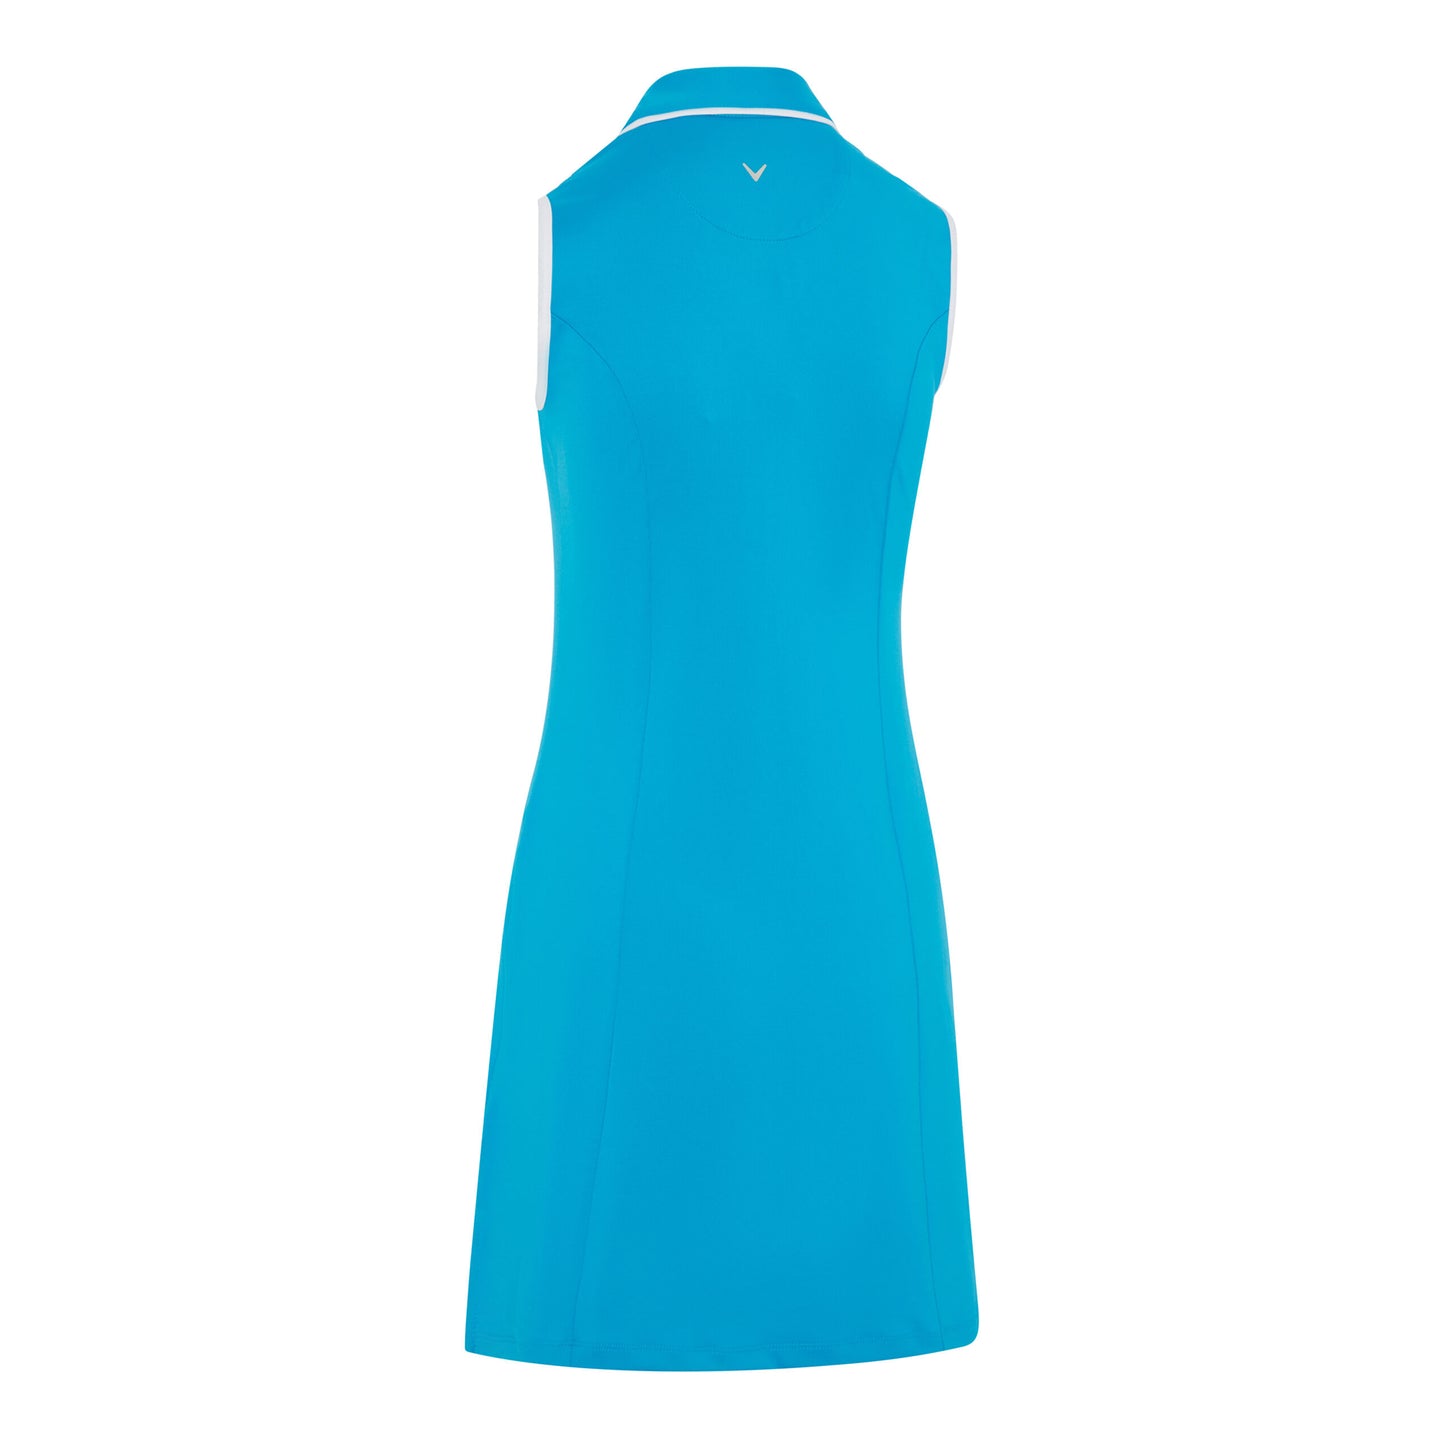 Callaway Ladies Sleeveless Vivid Blue Golf Dress with White Contrast Trim